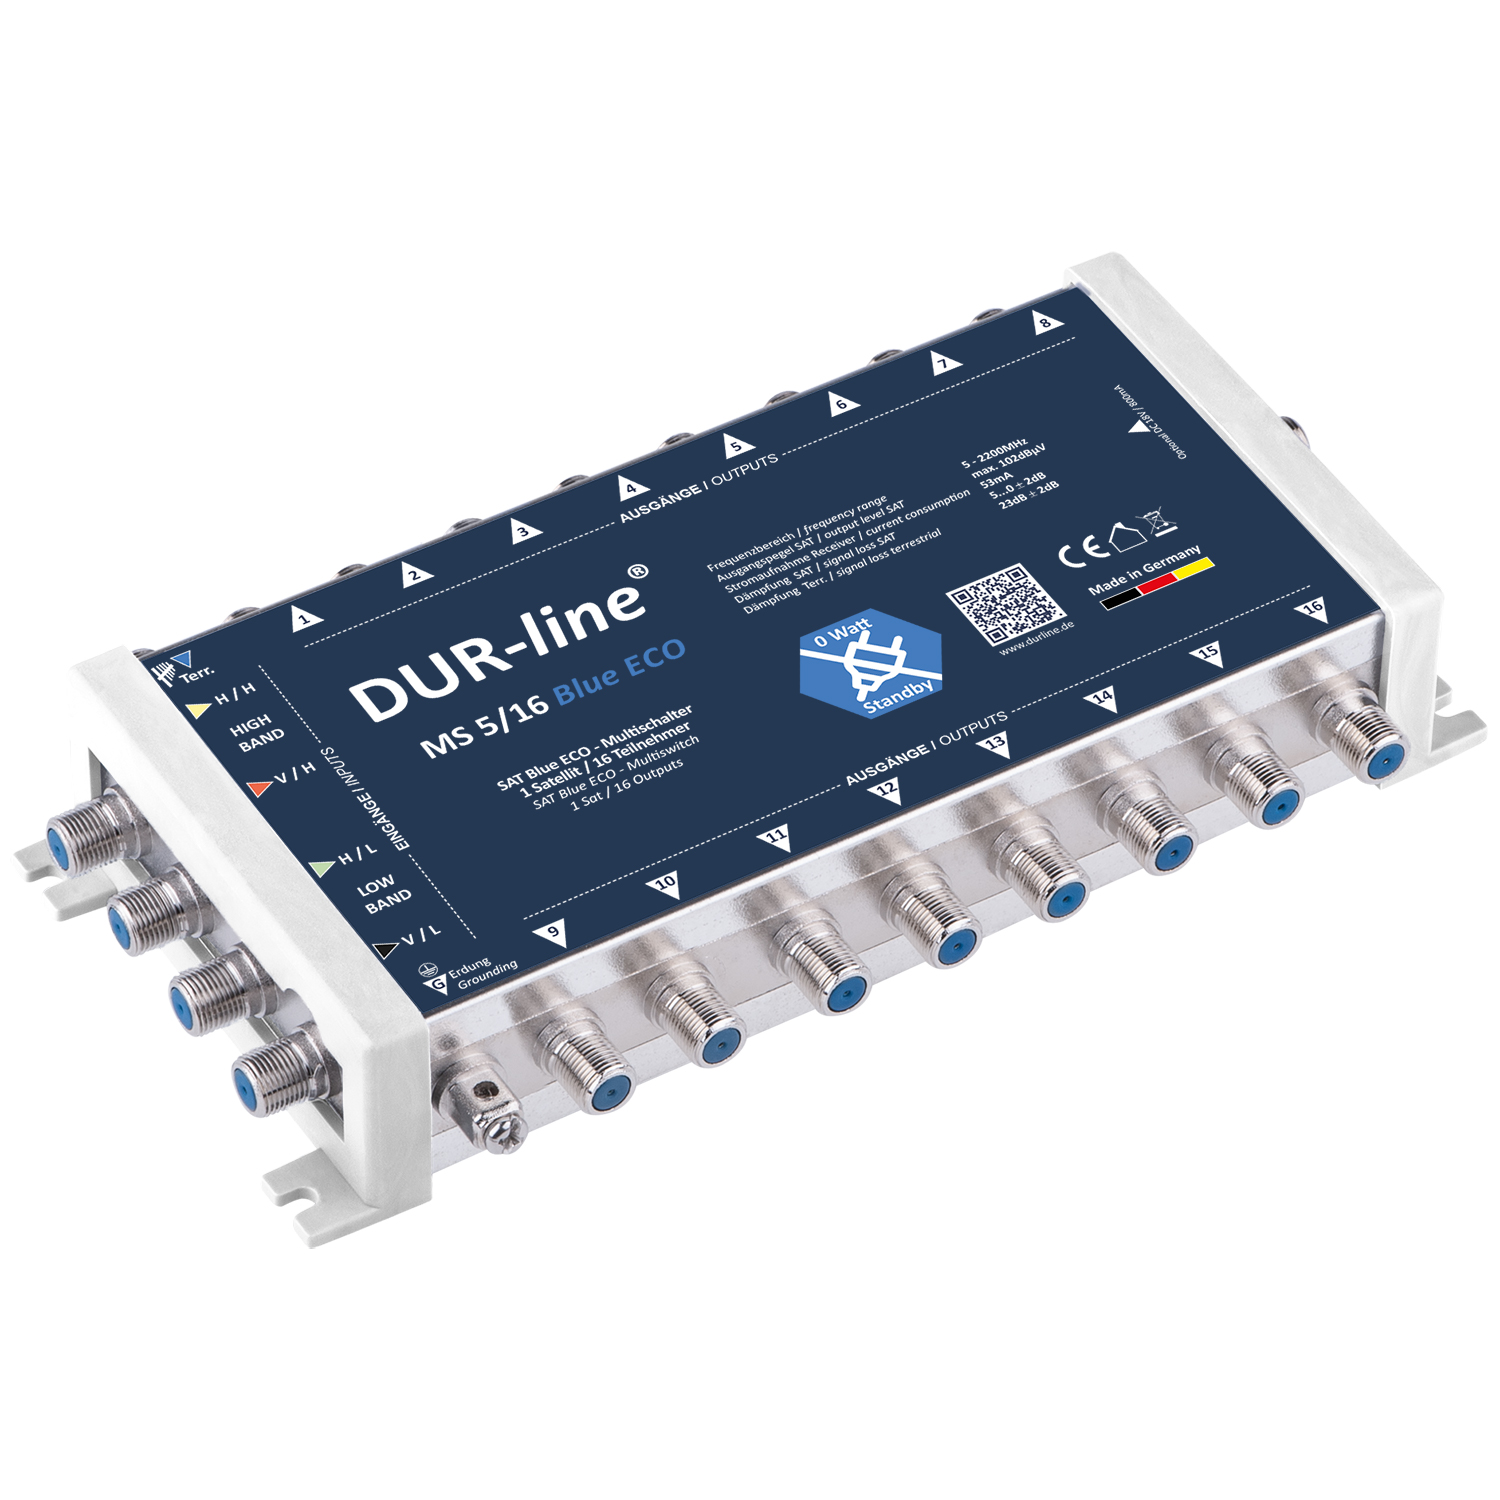 DUR-LINE MS 5/16 blue eco Multischalter